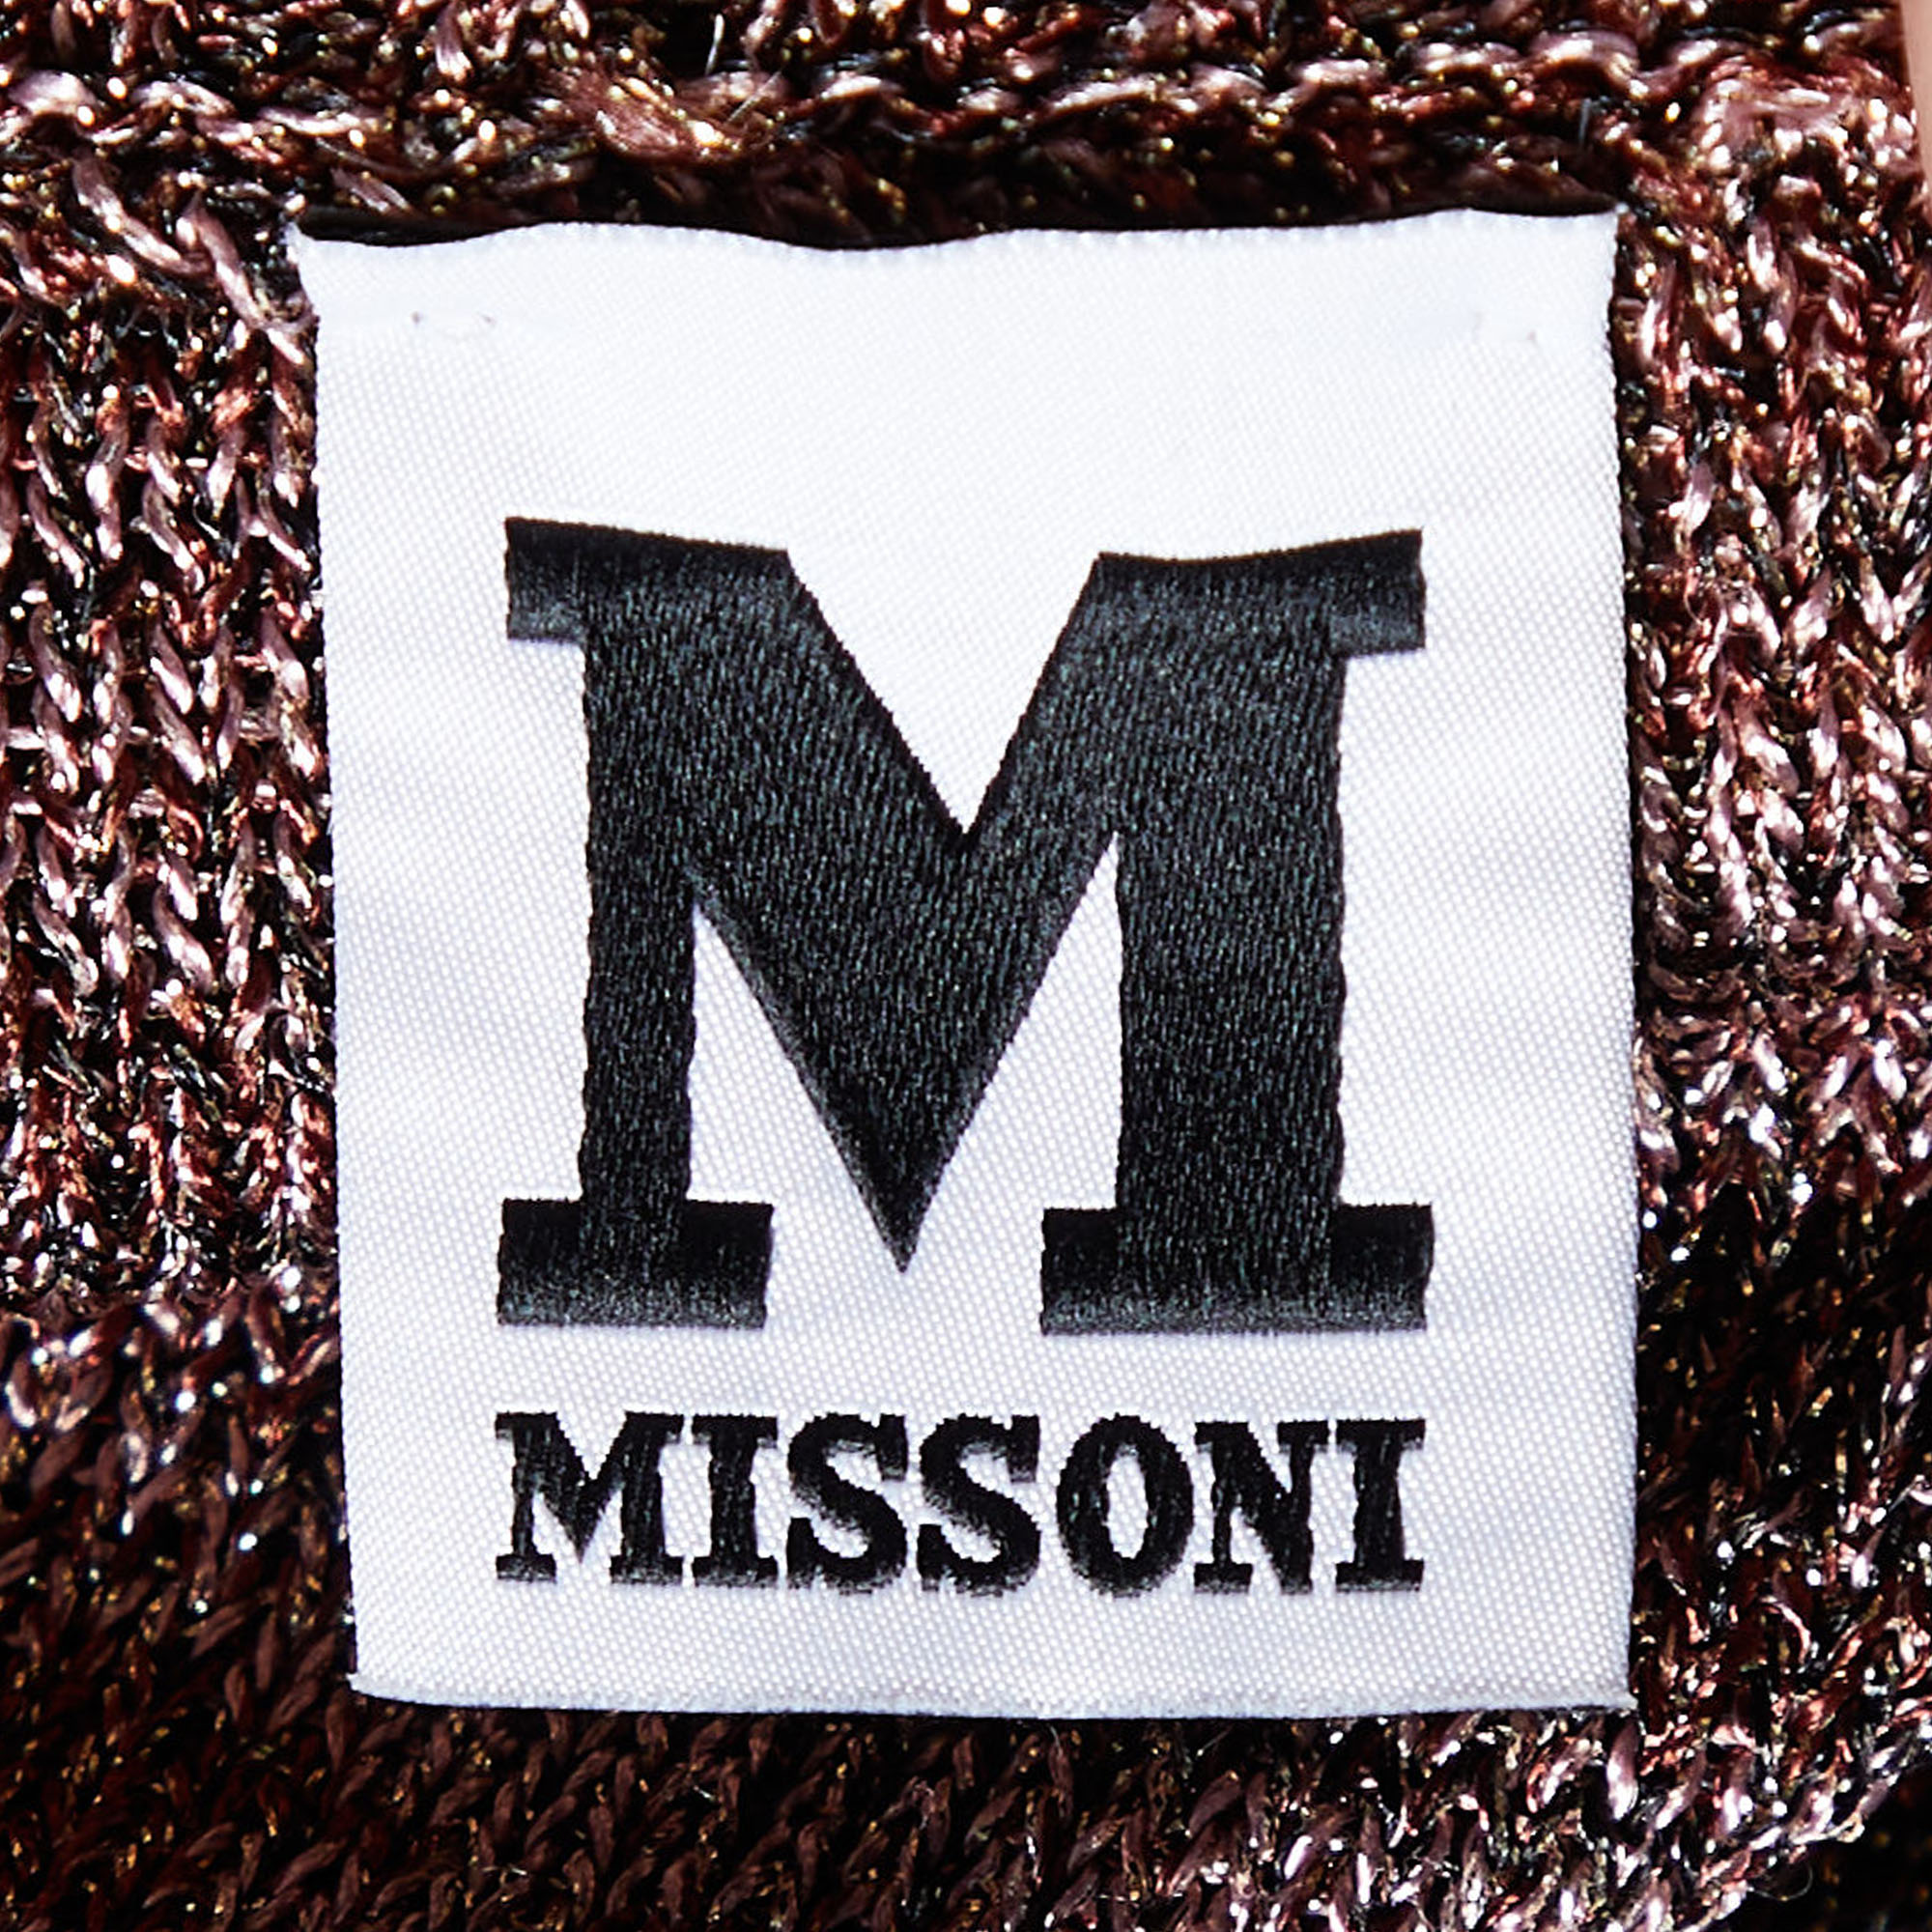 M Missoni Pink & Brown Lurex Knit Button Front Cardigan M